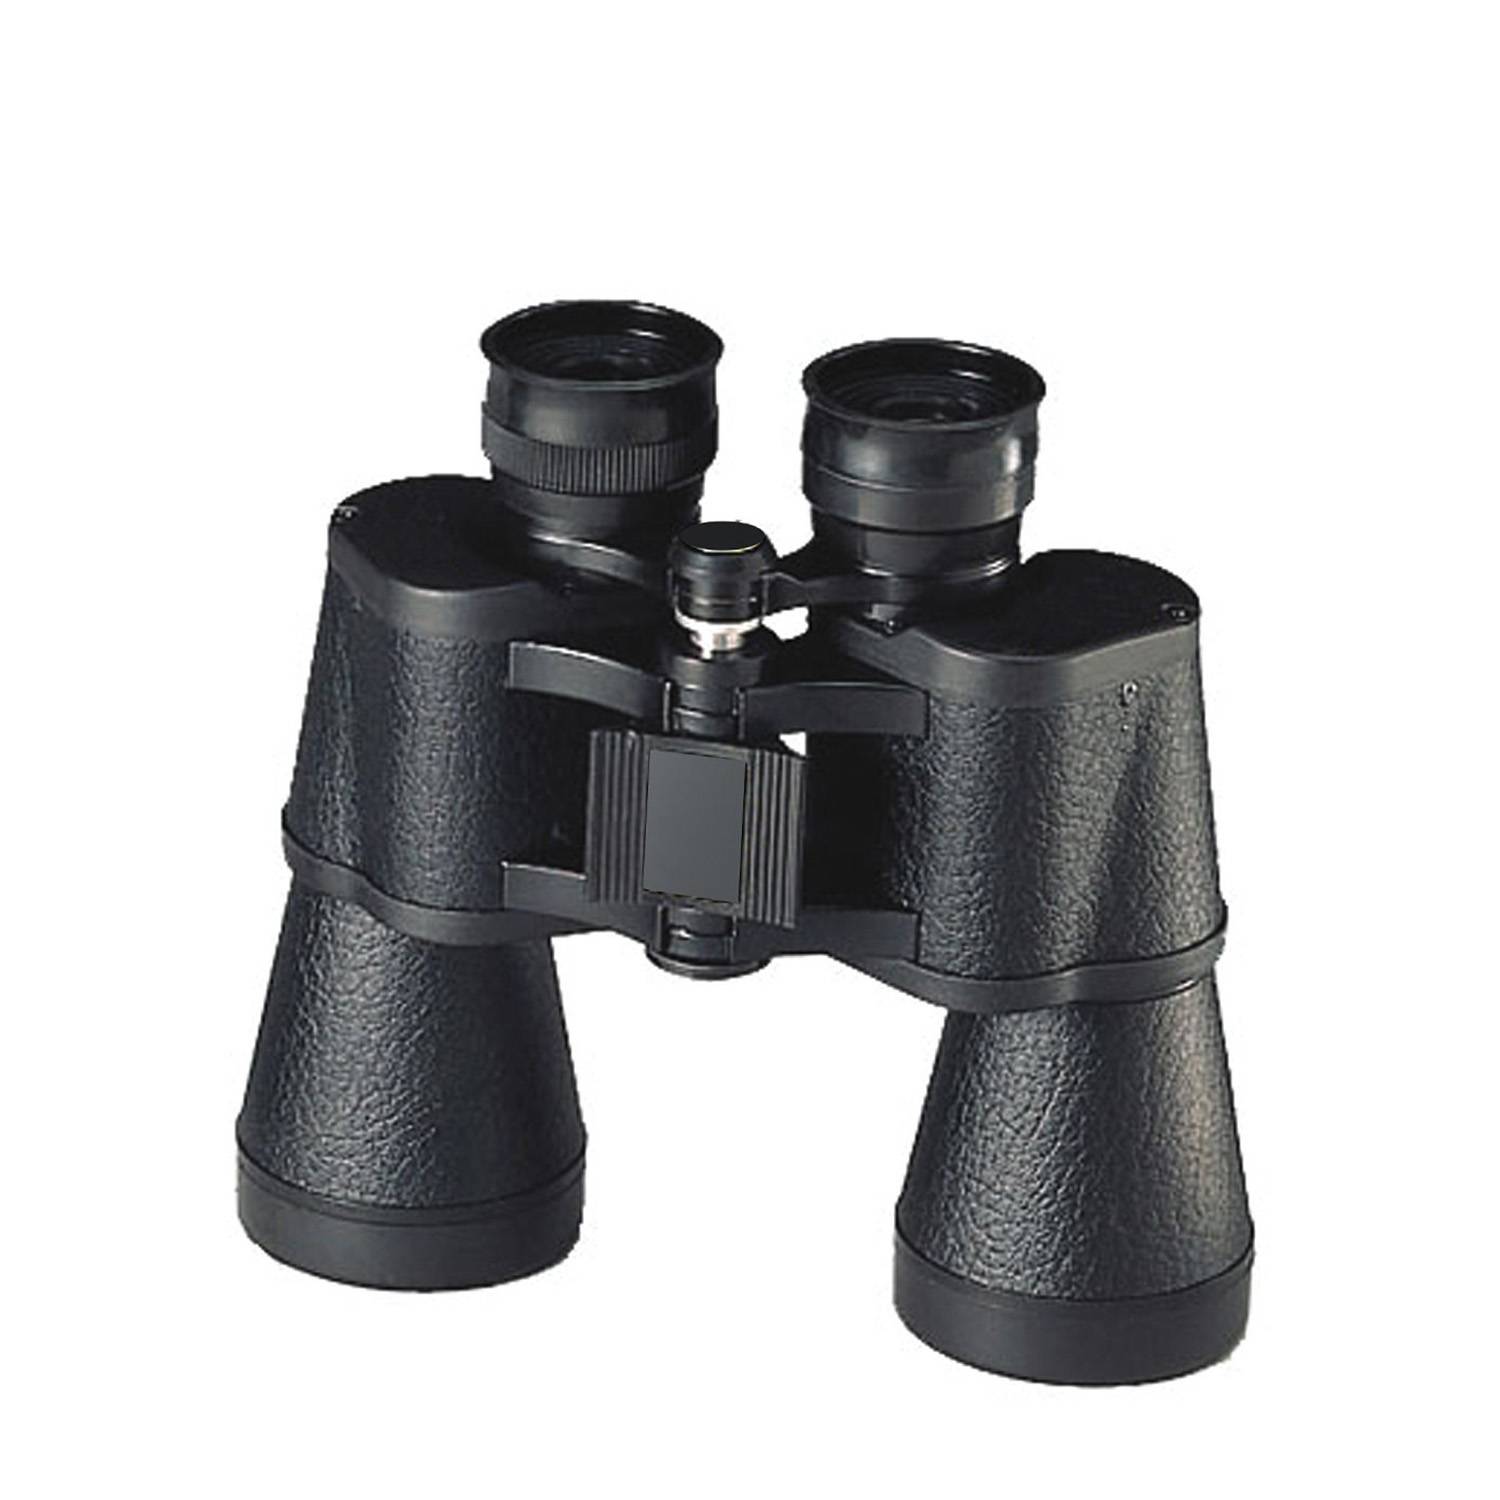 Rothco 10 X 50mm Binoculars w/Case